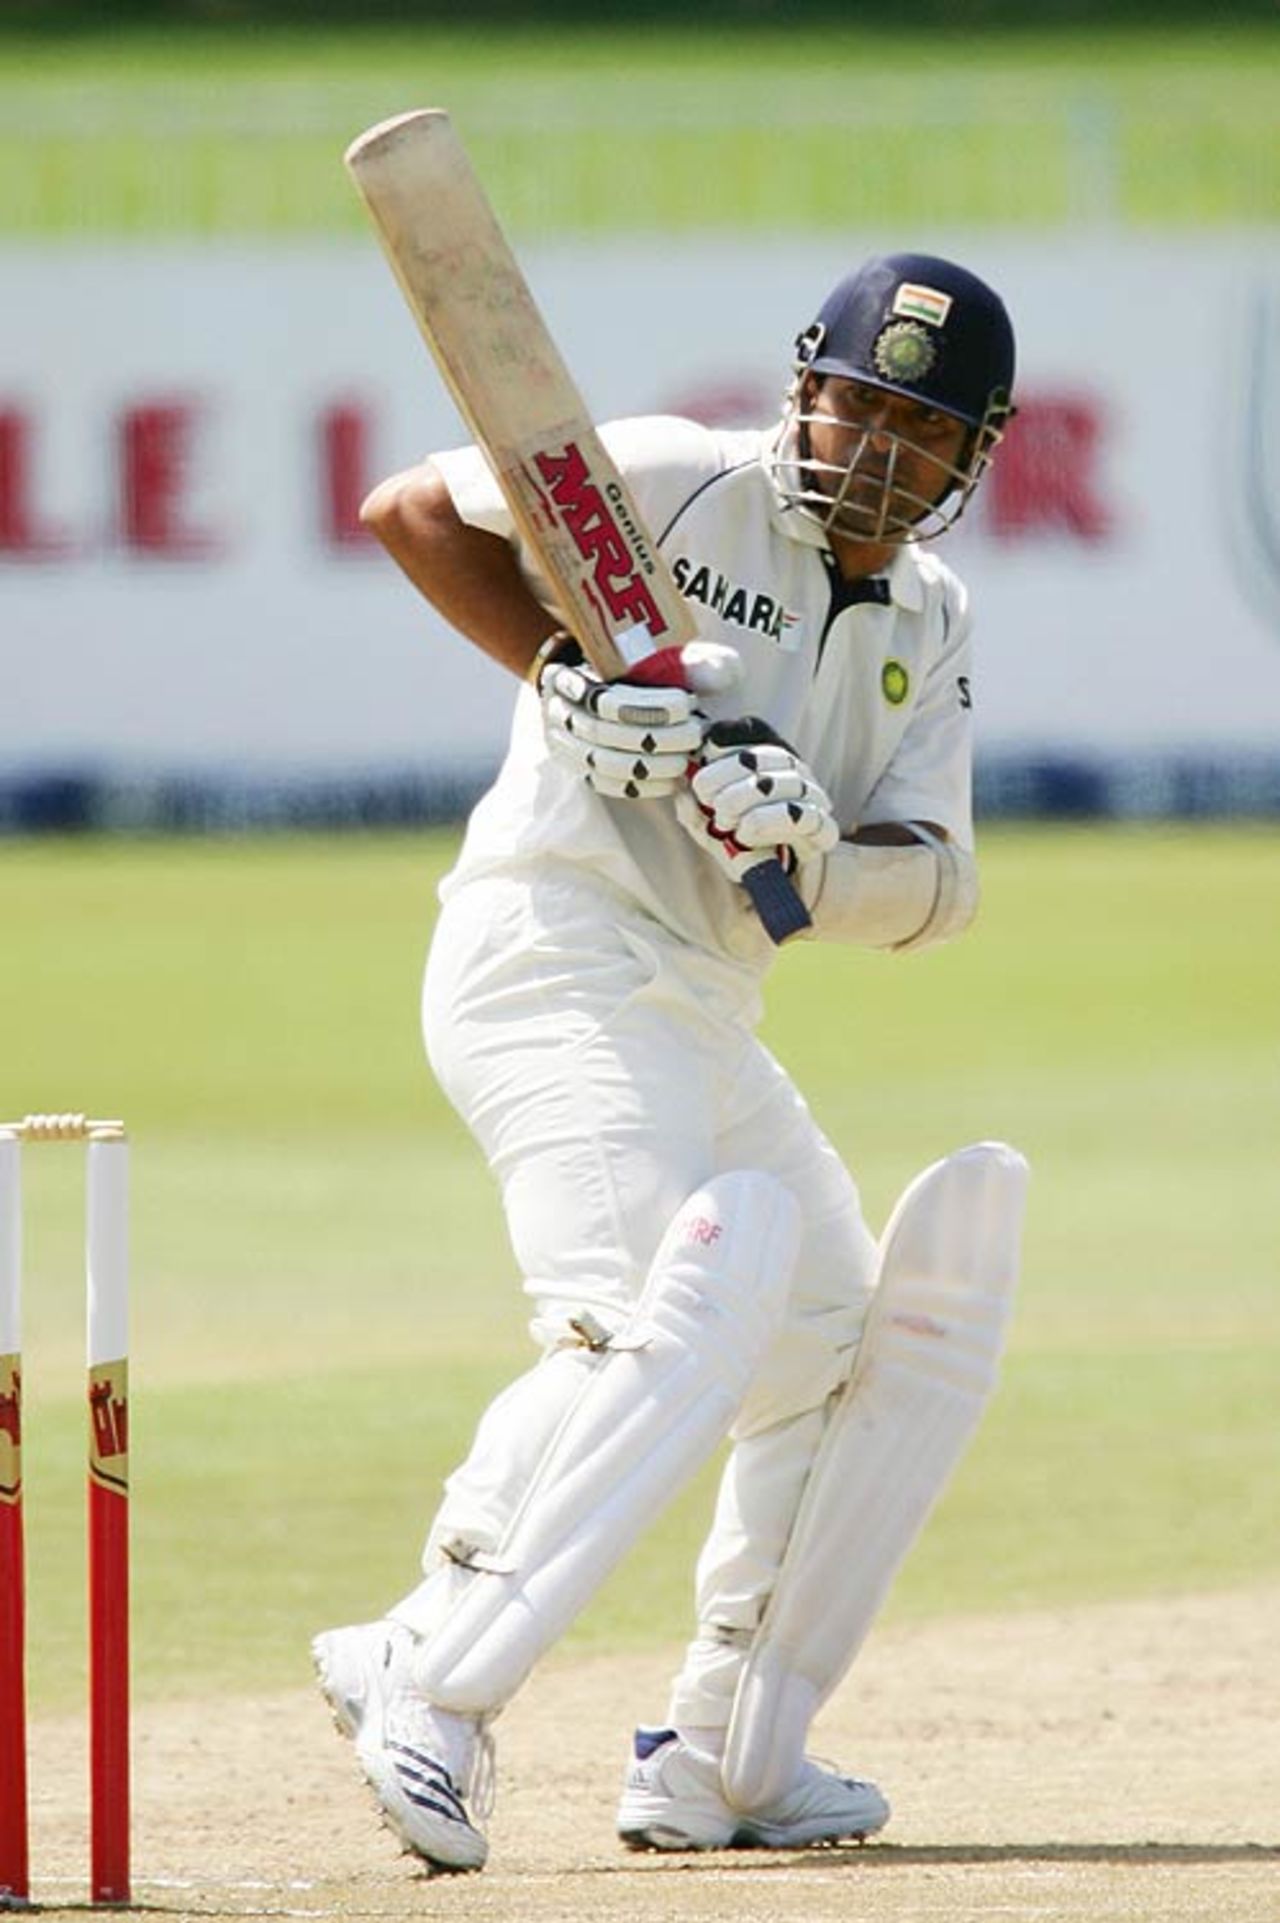 Sachin Tendulkar lets one pass through, South Africa v India, 2nd Test, Durban, 2nd day, December 27, 2006